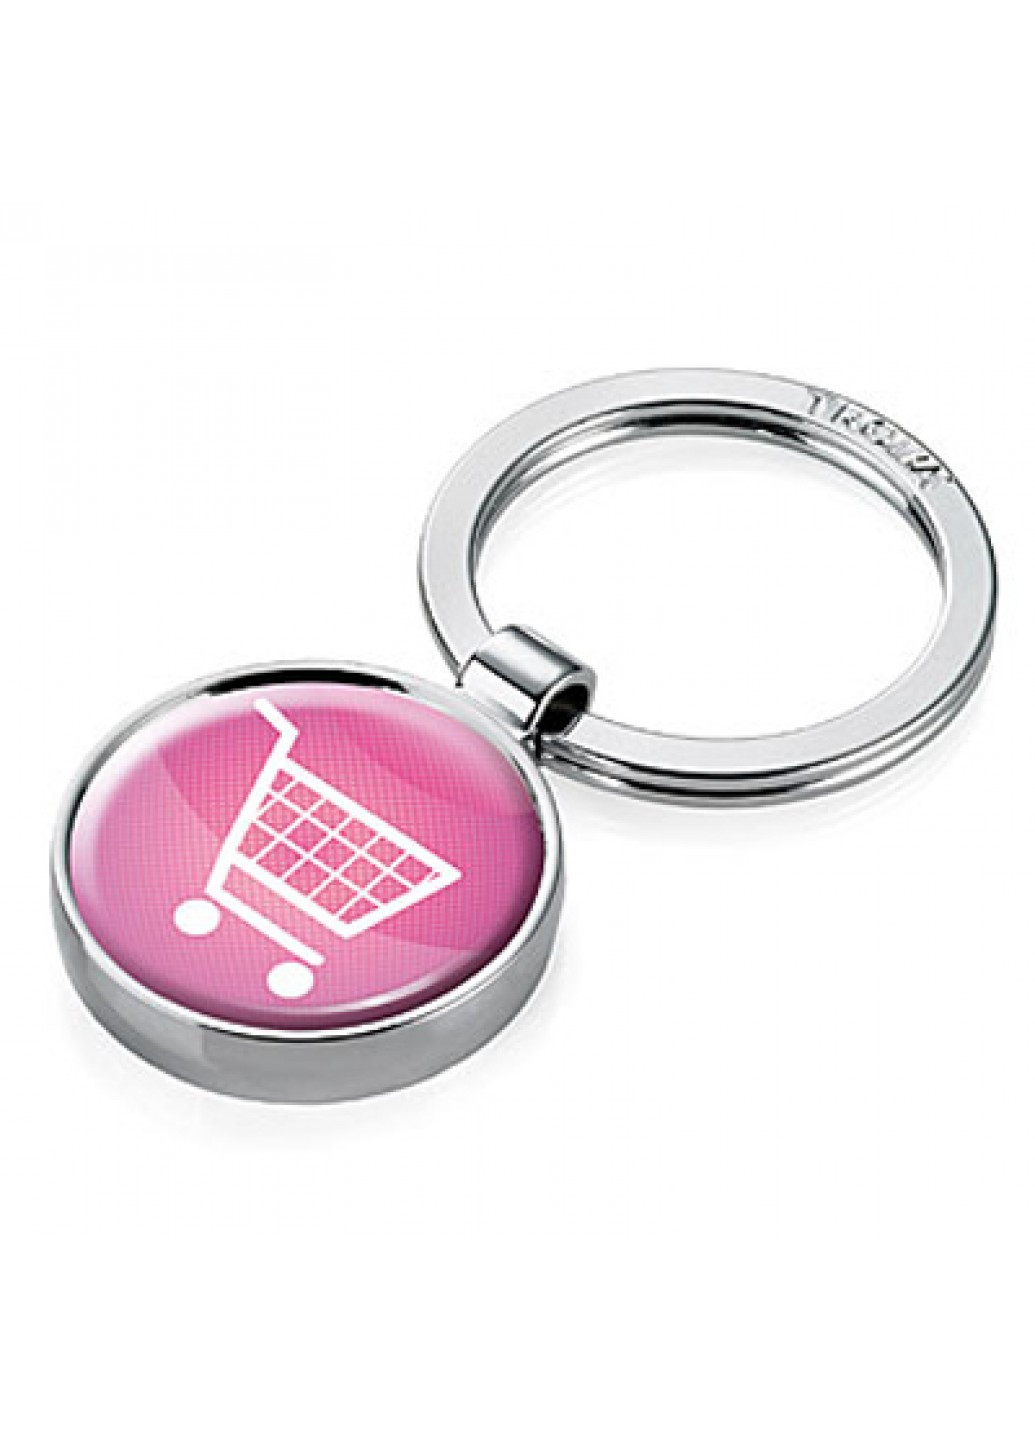 Брелок Shopping; рожевий, Troika kyr14-a142 (208083059)